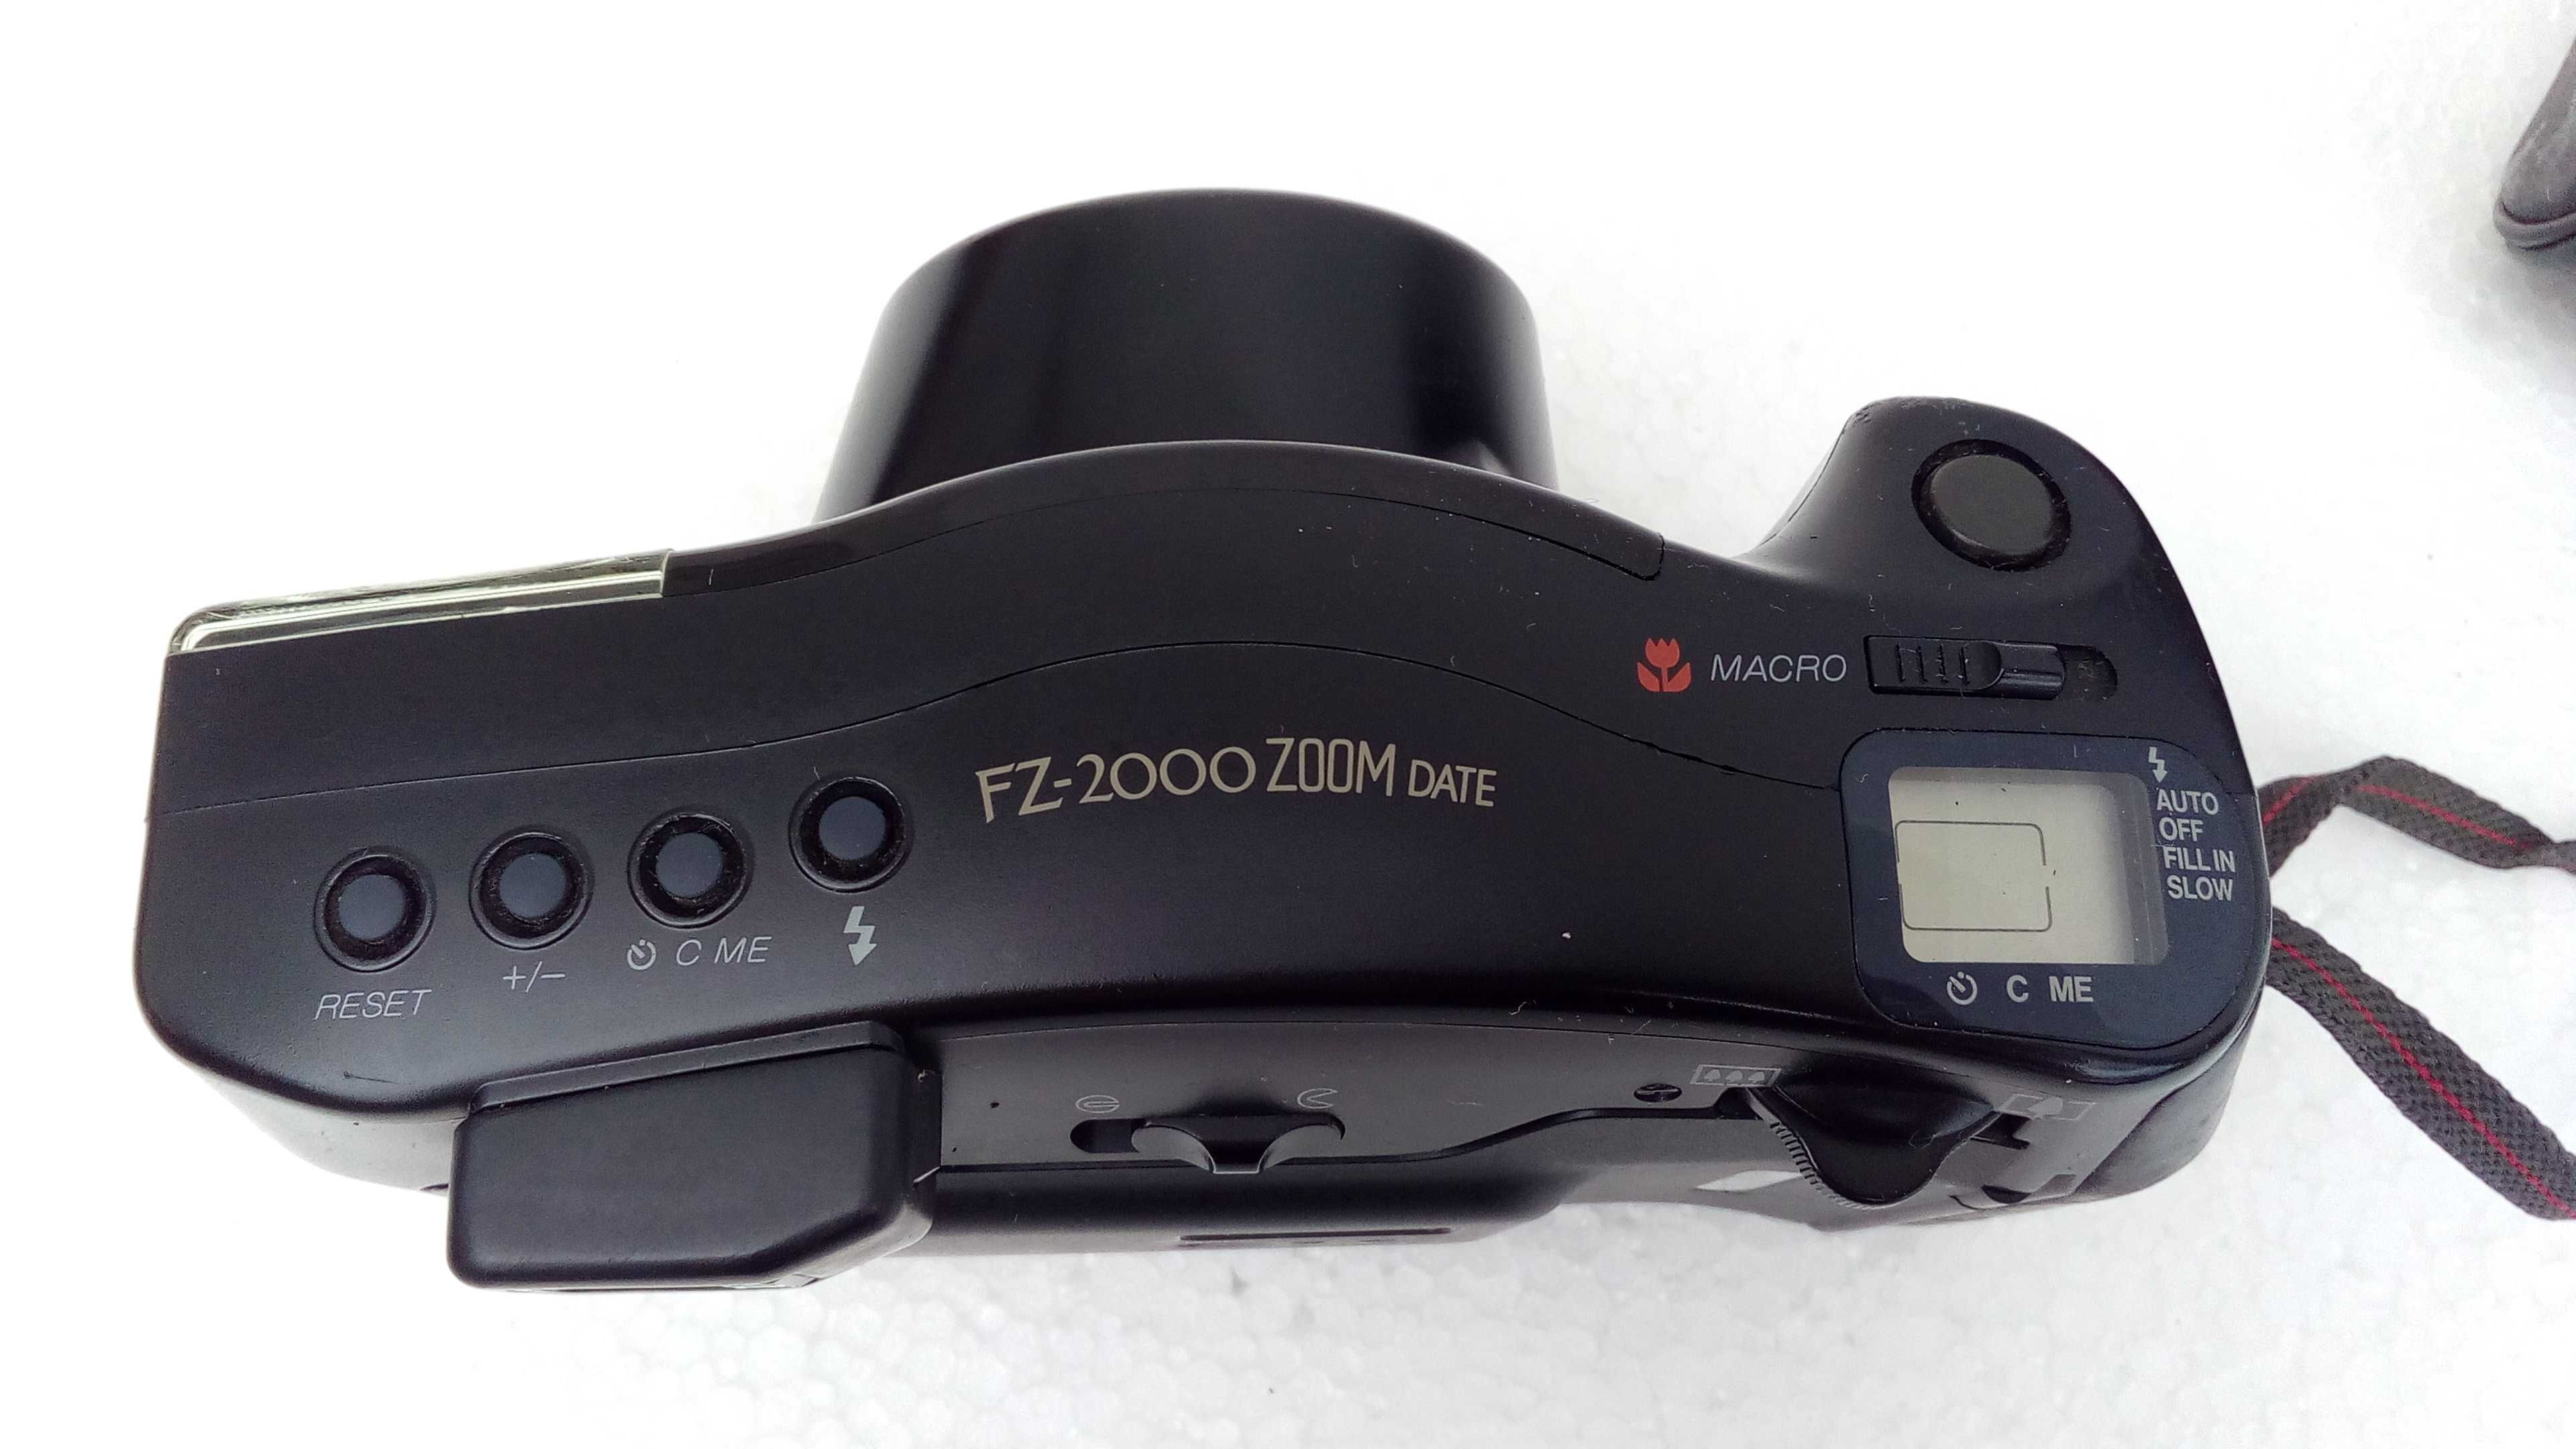 Máquina Fotográfica Fuji FZ-2000 Zoom Date + bolsa original